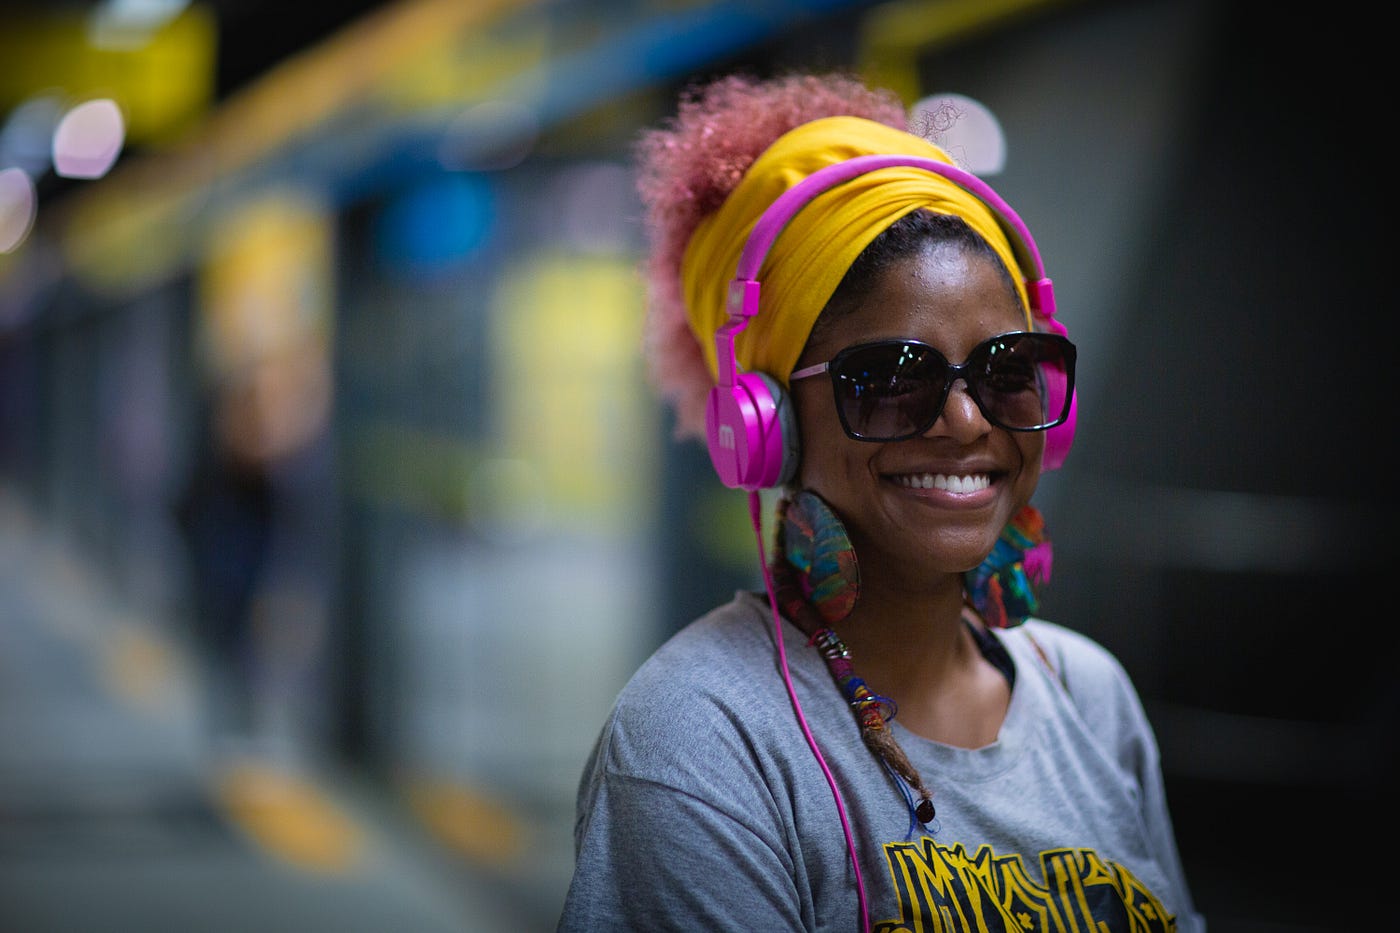 Lady wearing bright pink headphones